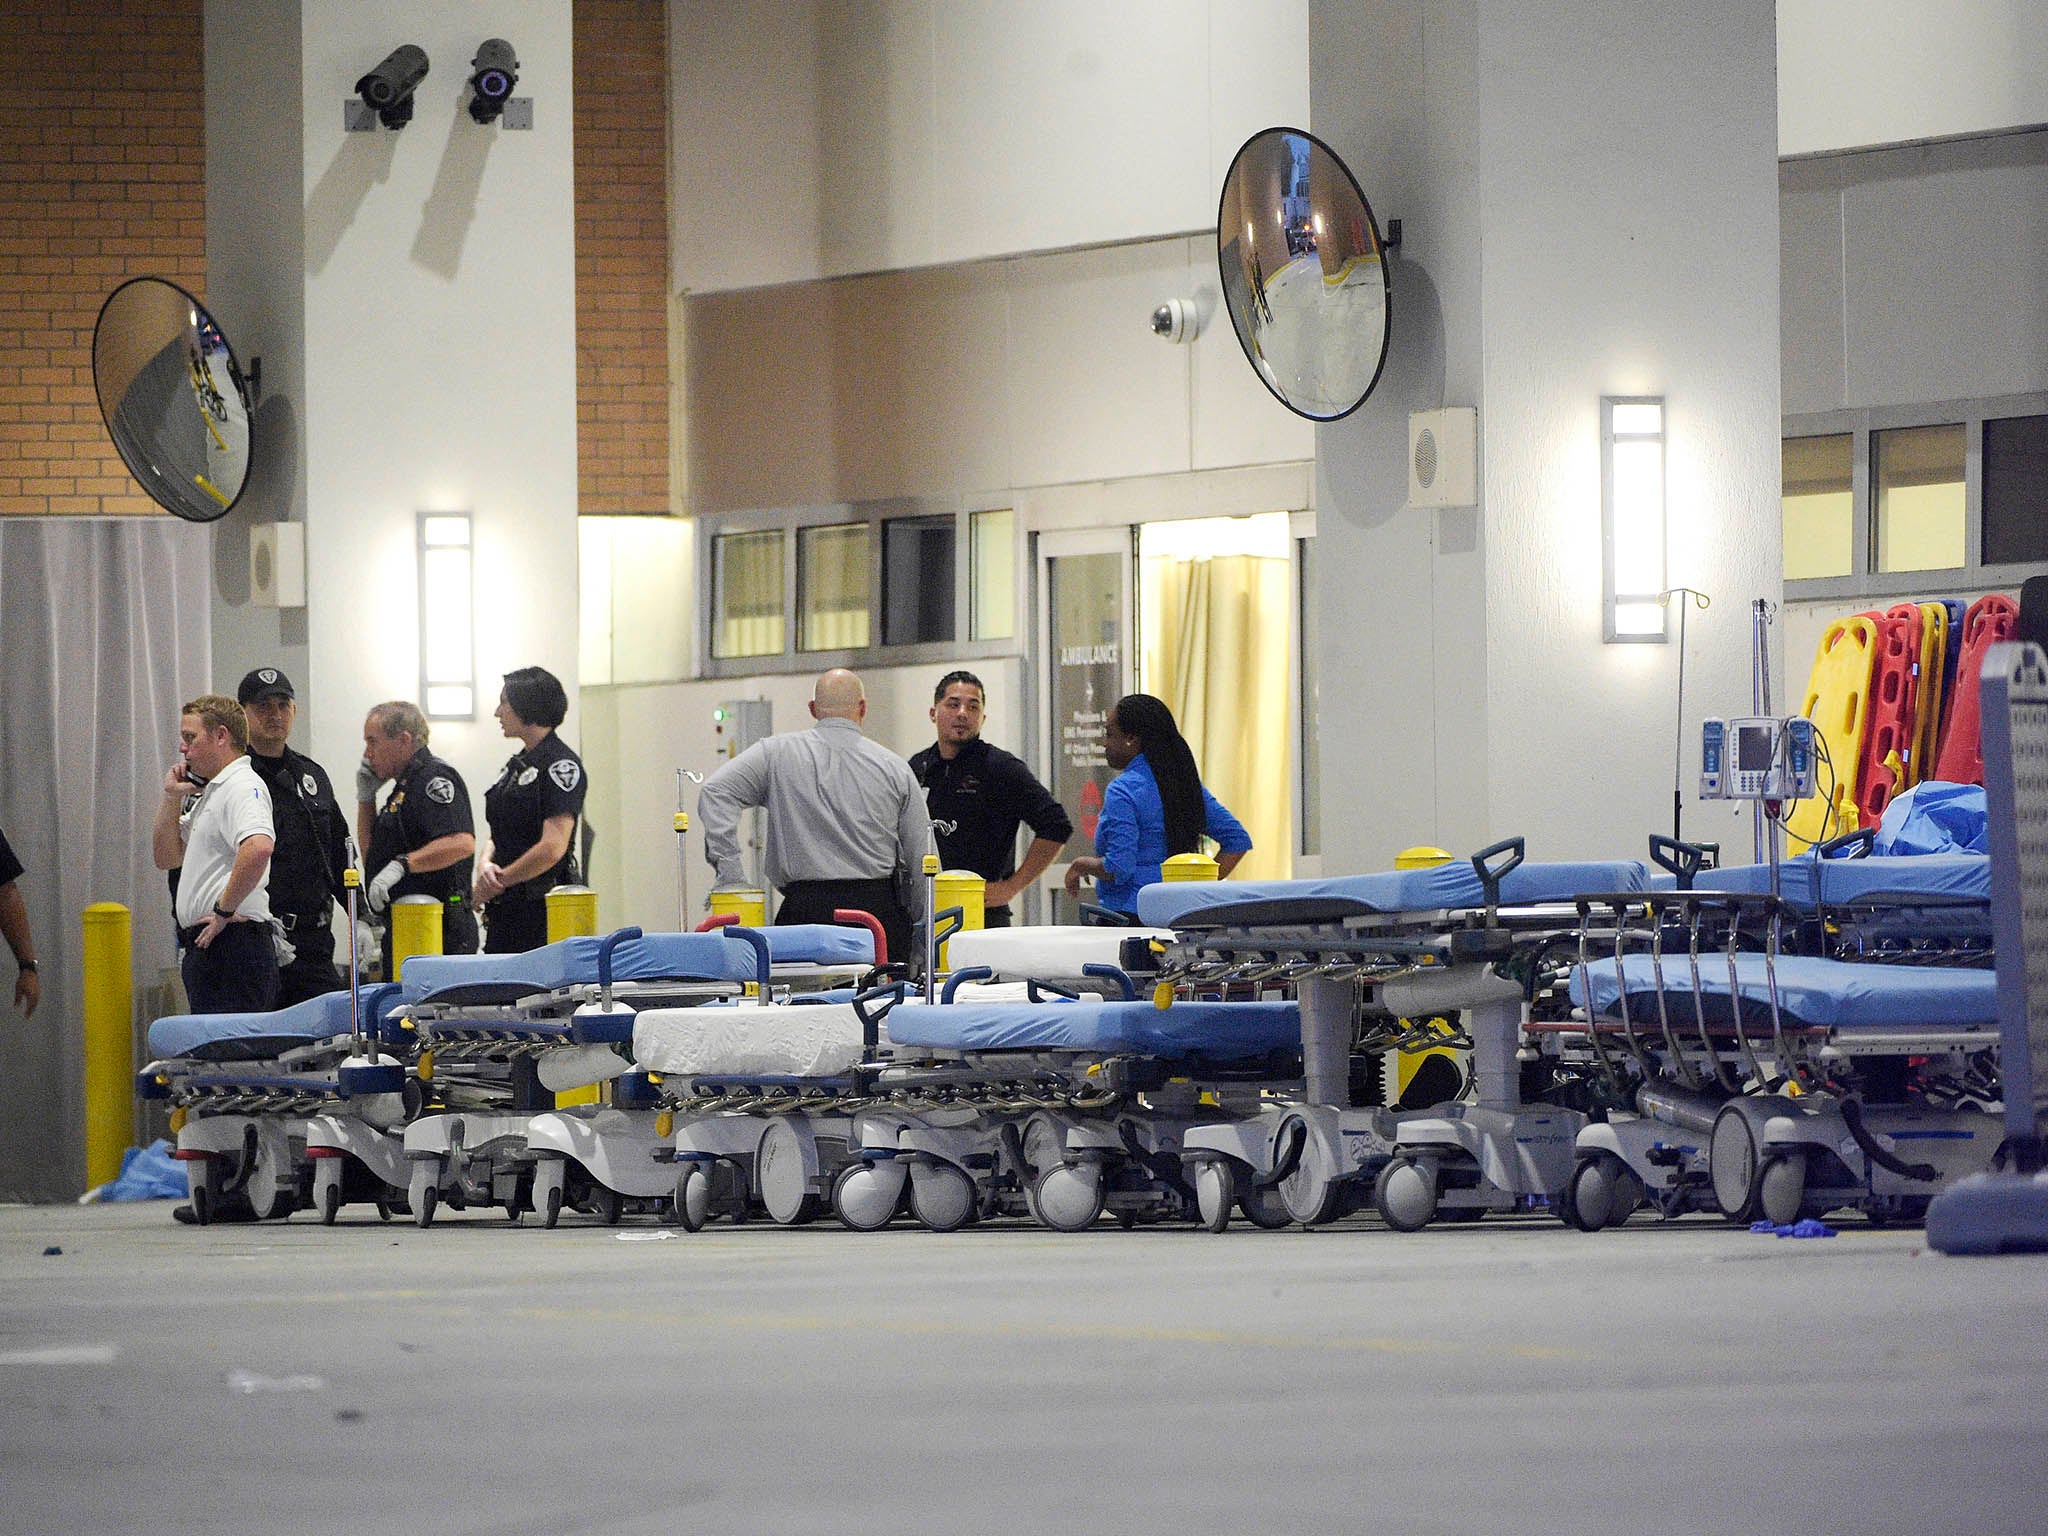 Medics wait with stretchers at the emergency entrance to Orlando Regional Medical Center hospital